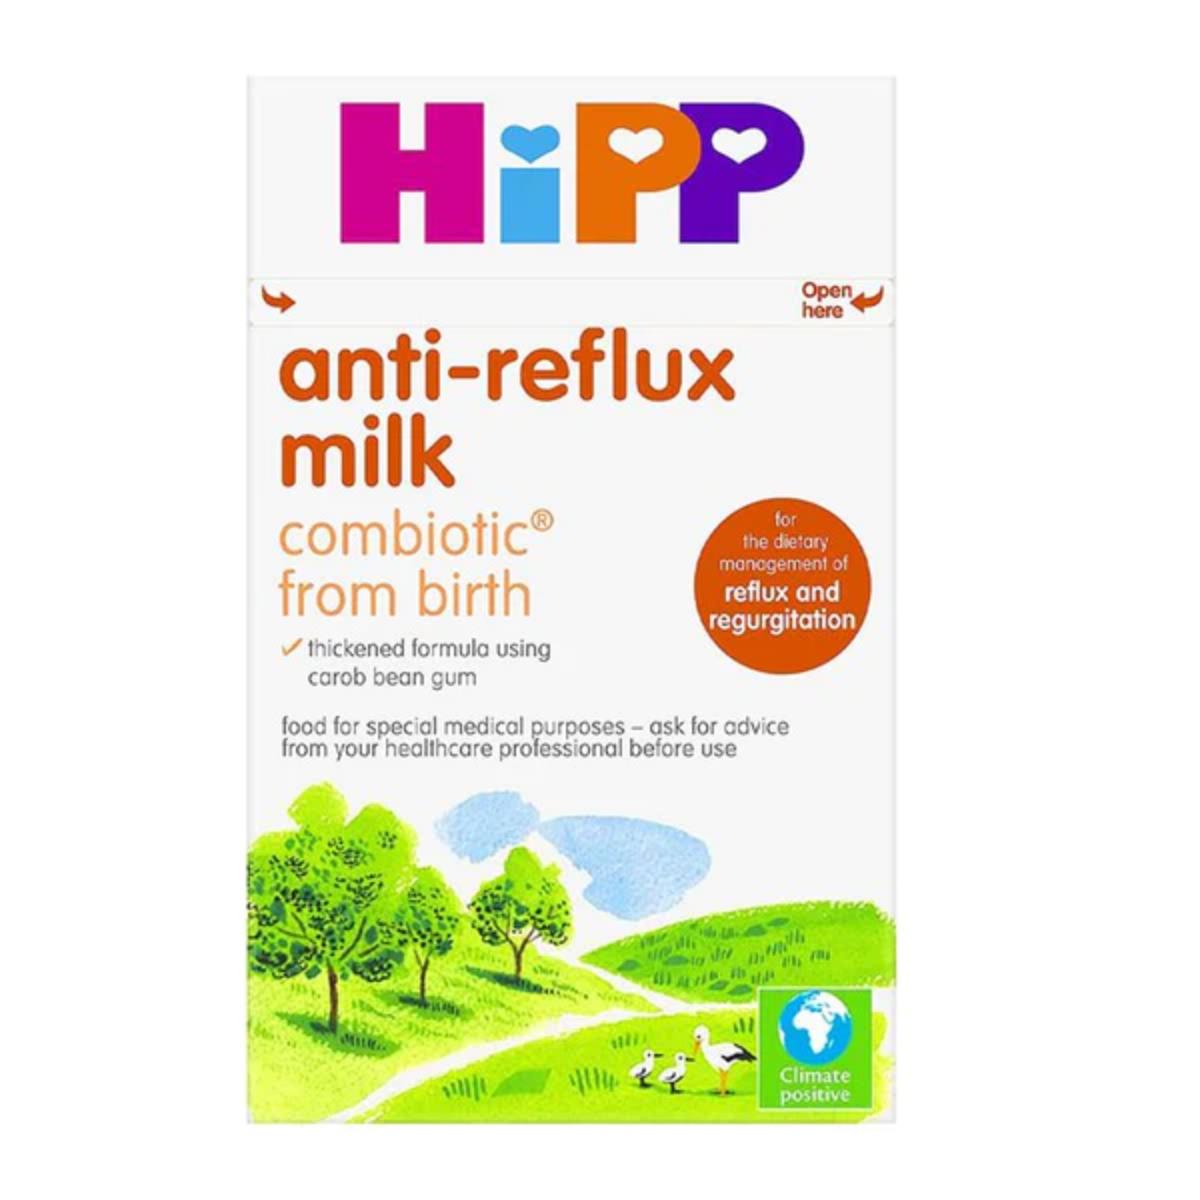 Hipp Anti-Reflux Milk Combiotic from birth - 800g